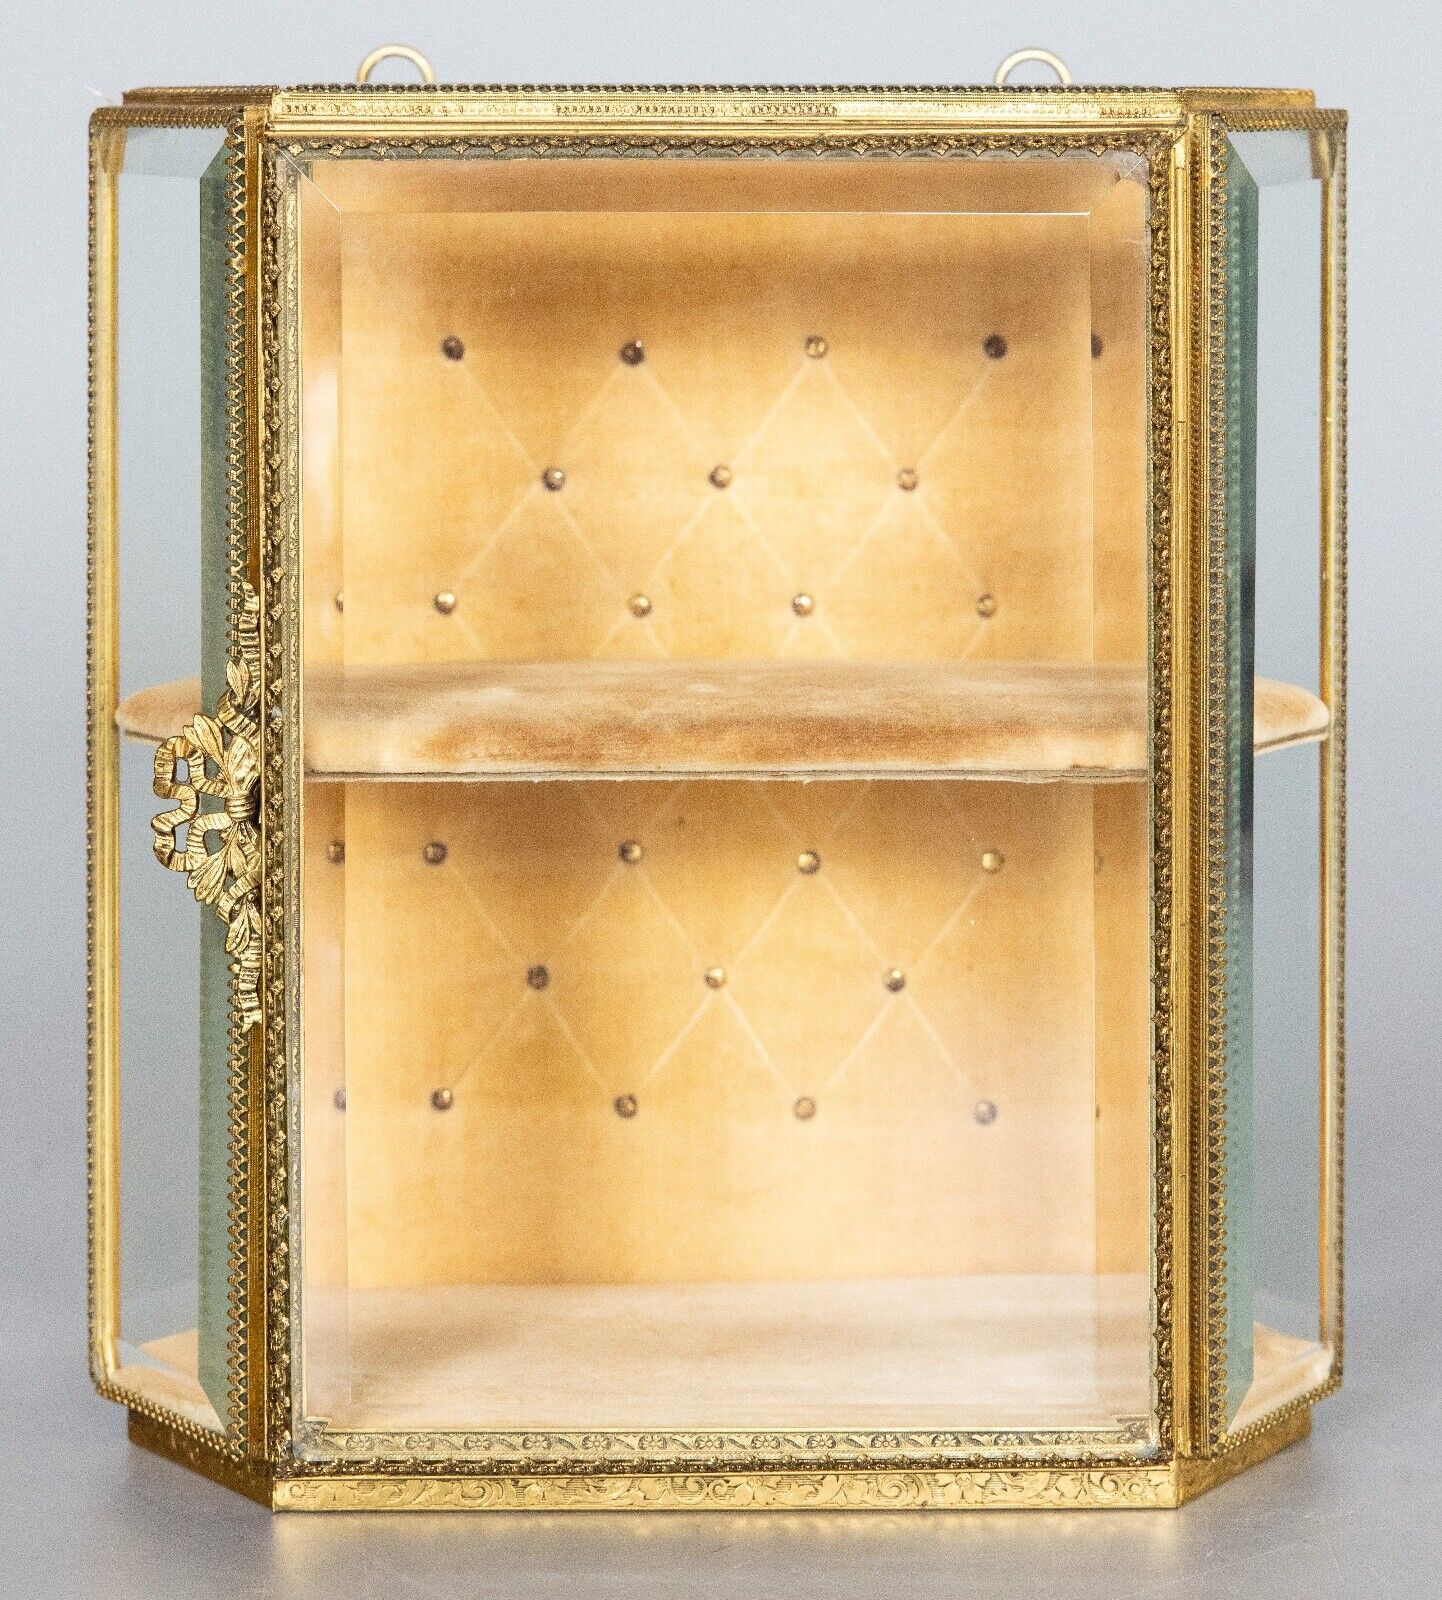 Large French Ormolu & Glass Hanging Wall Jewelry Casket Box